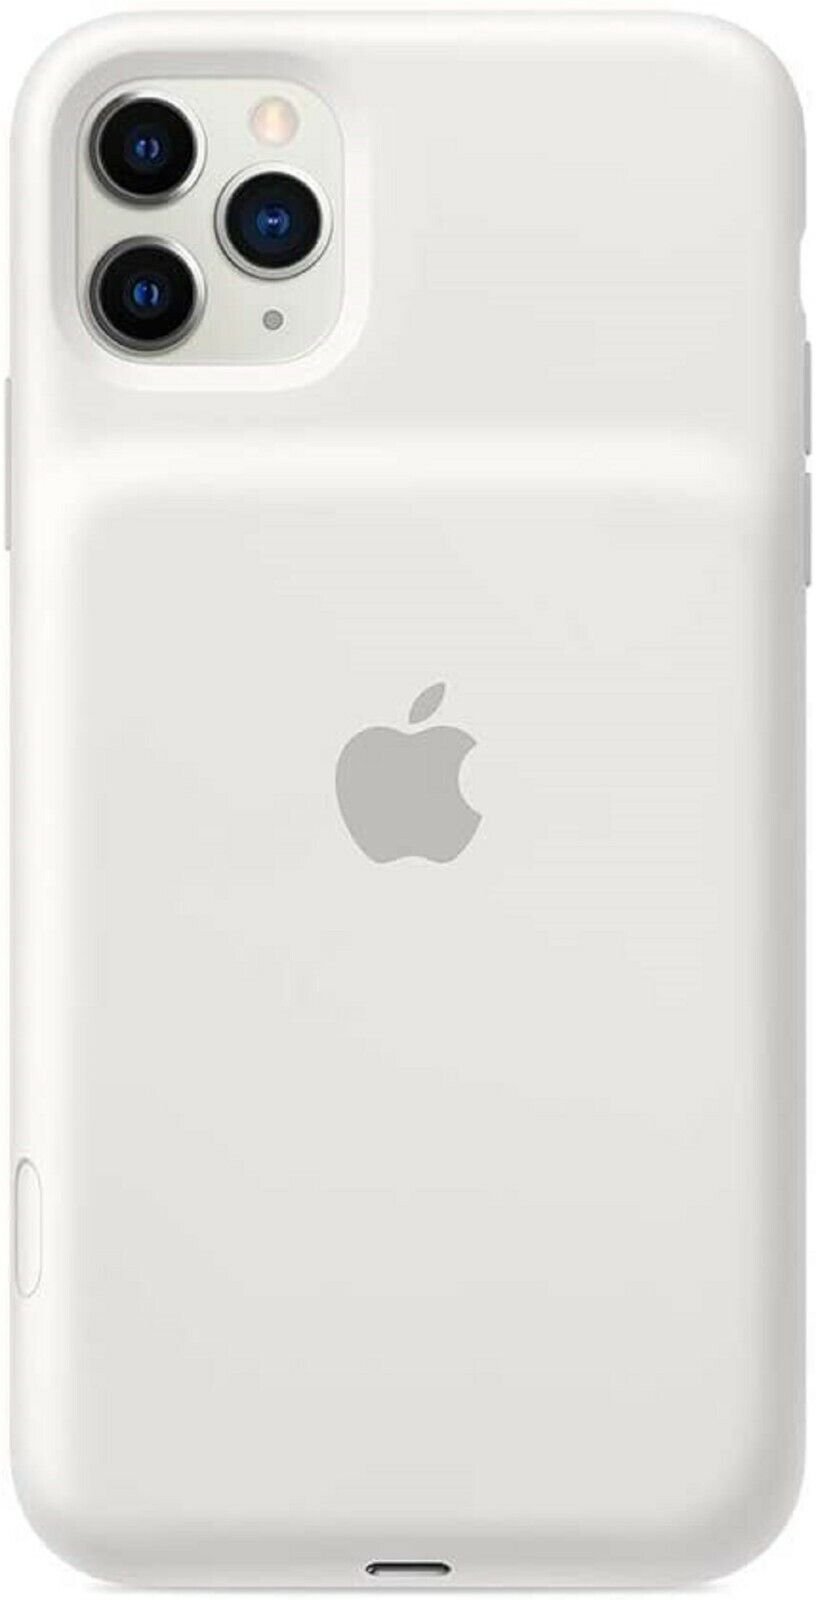 Genuine Apple iPhone 11 Pro Max Smart Battery Case | eBay